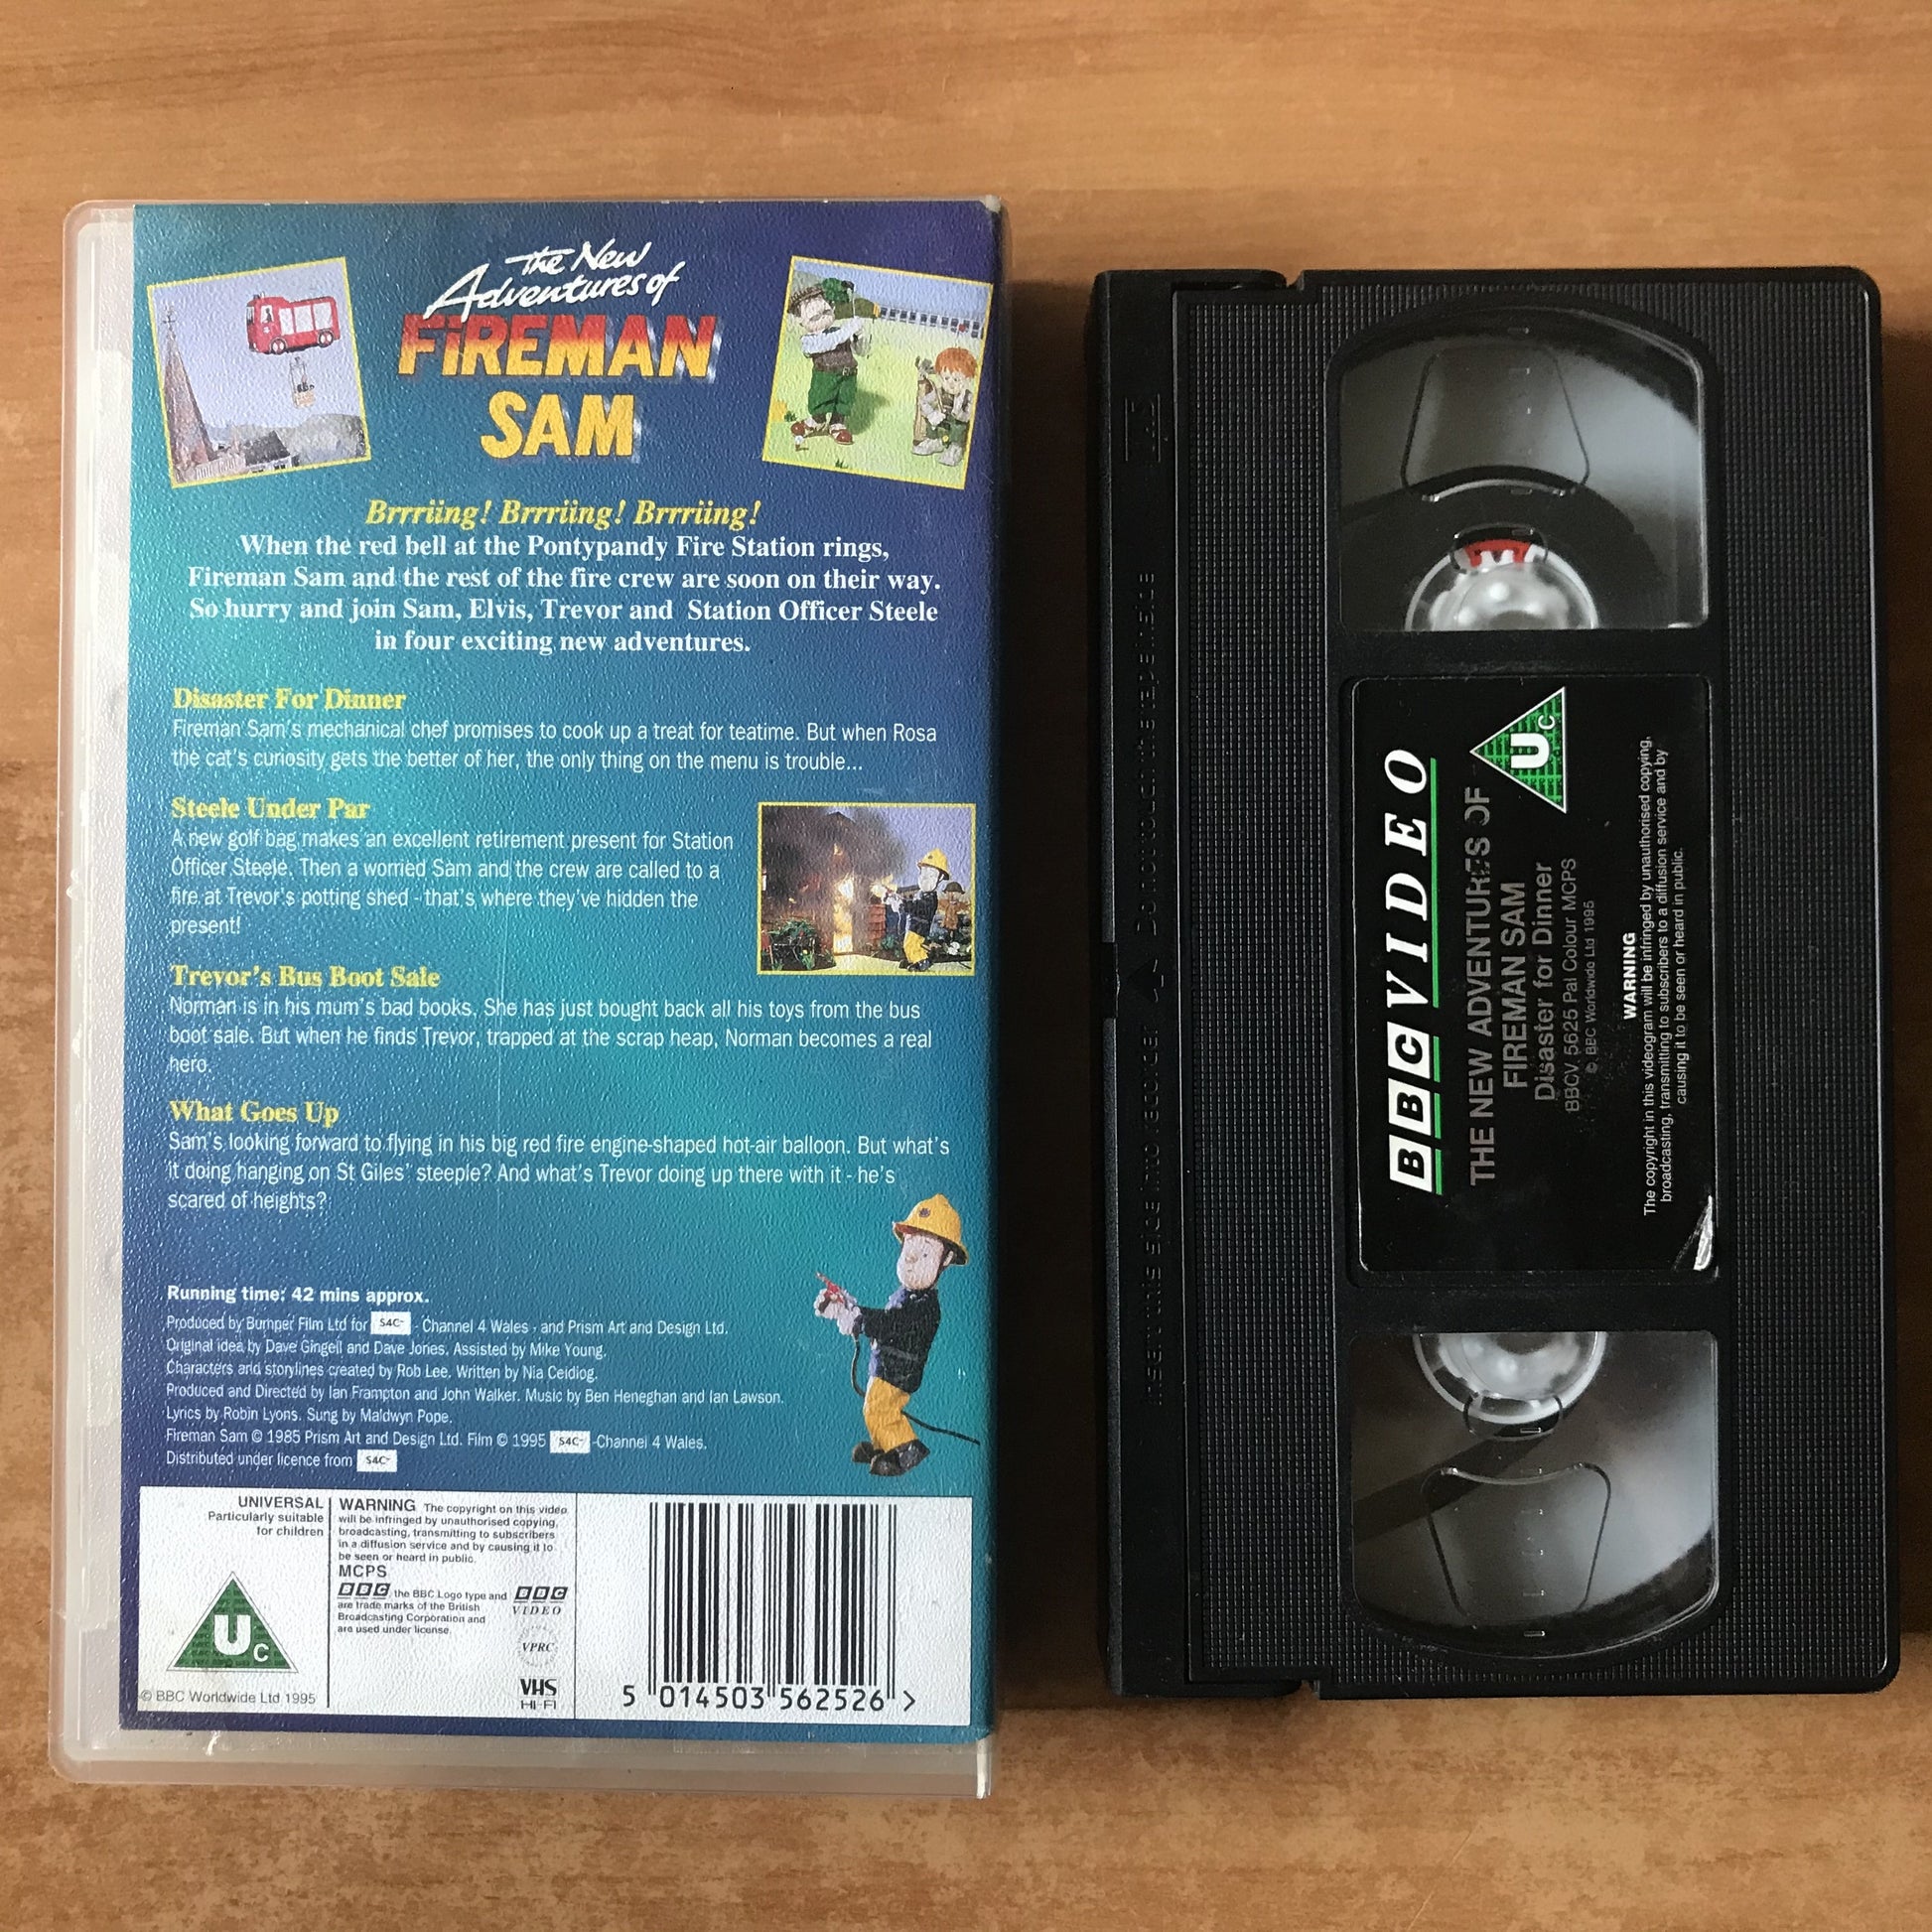 Fireman Sam (BBC): Disaster For Dinner - New Adventures - Bus Boot Sale - VHS-